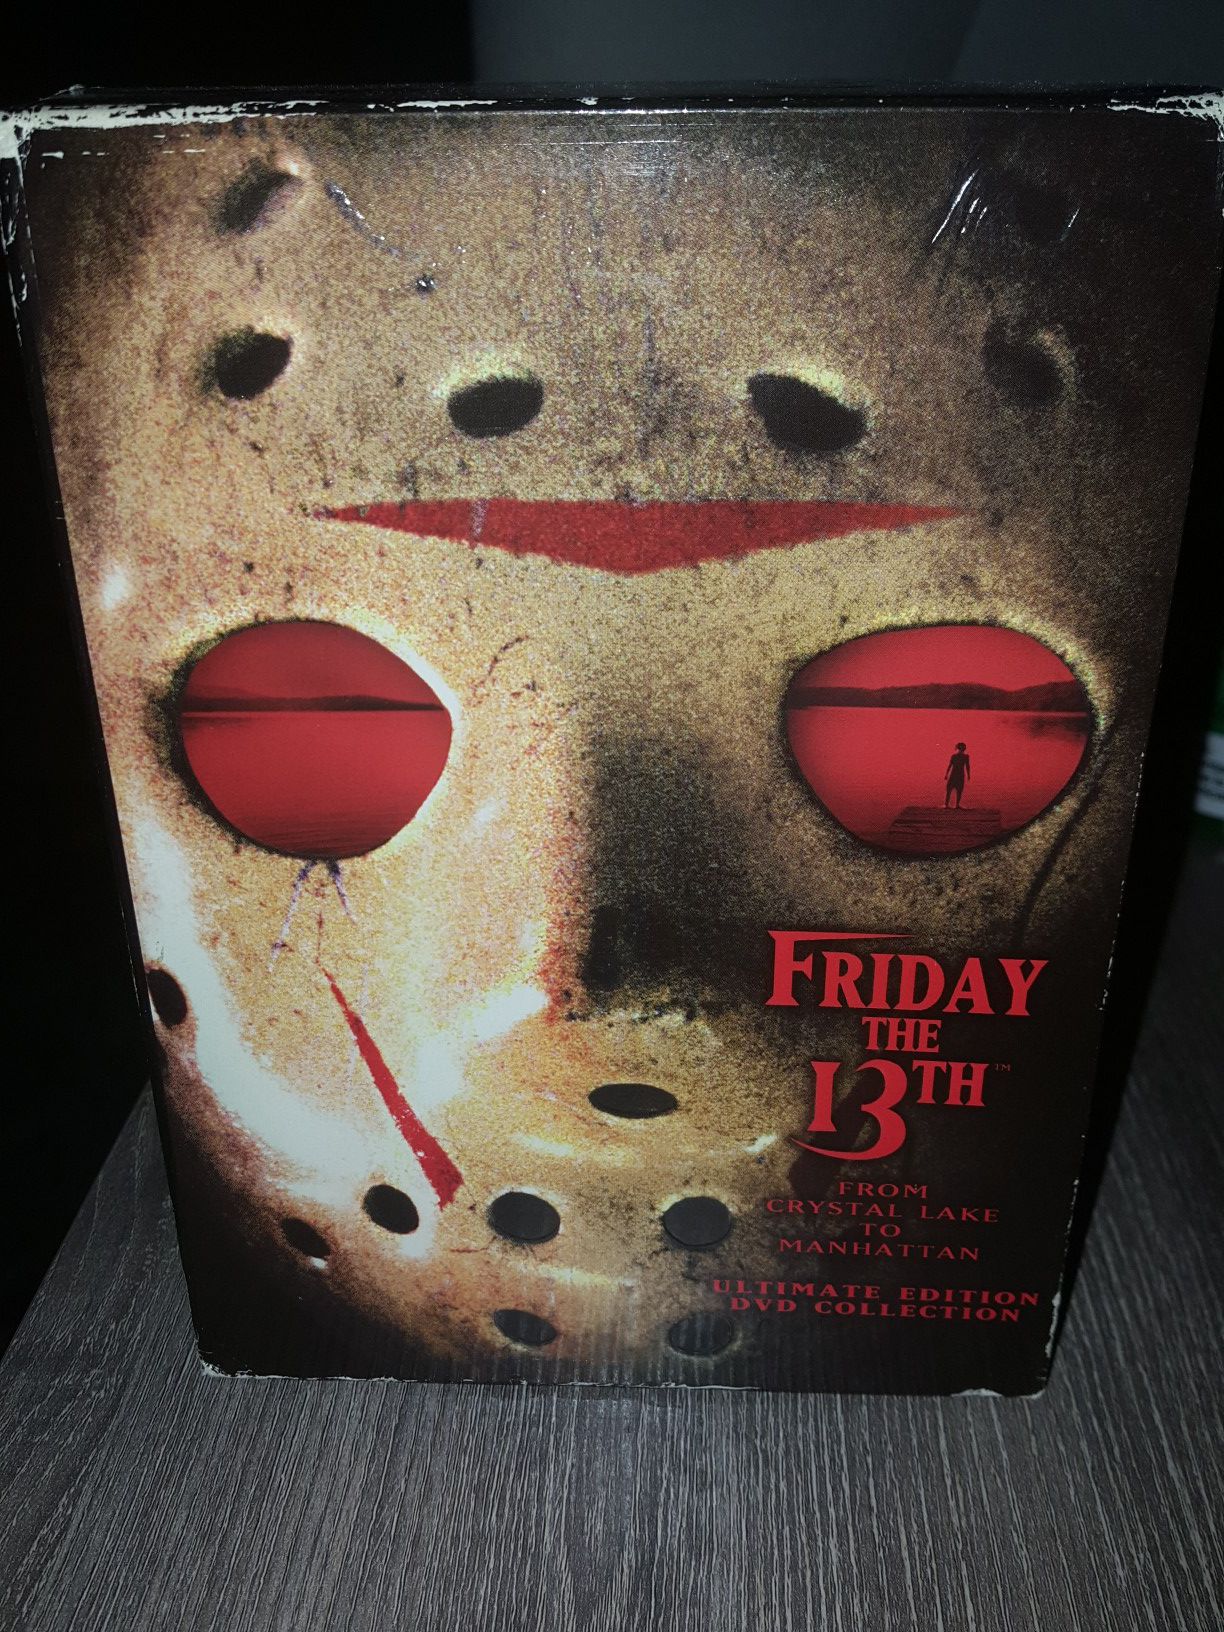 Friday the 13th (DVD boxset)